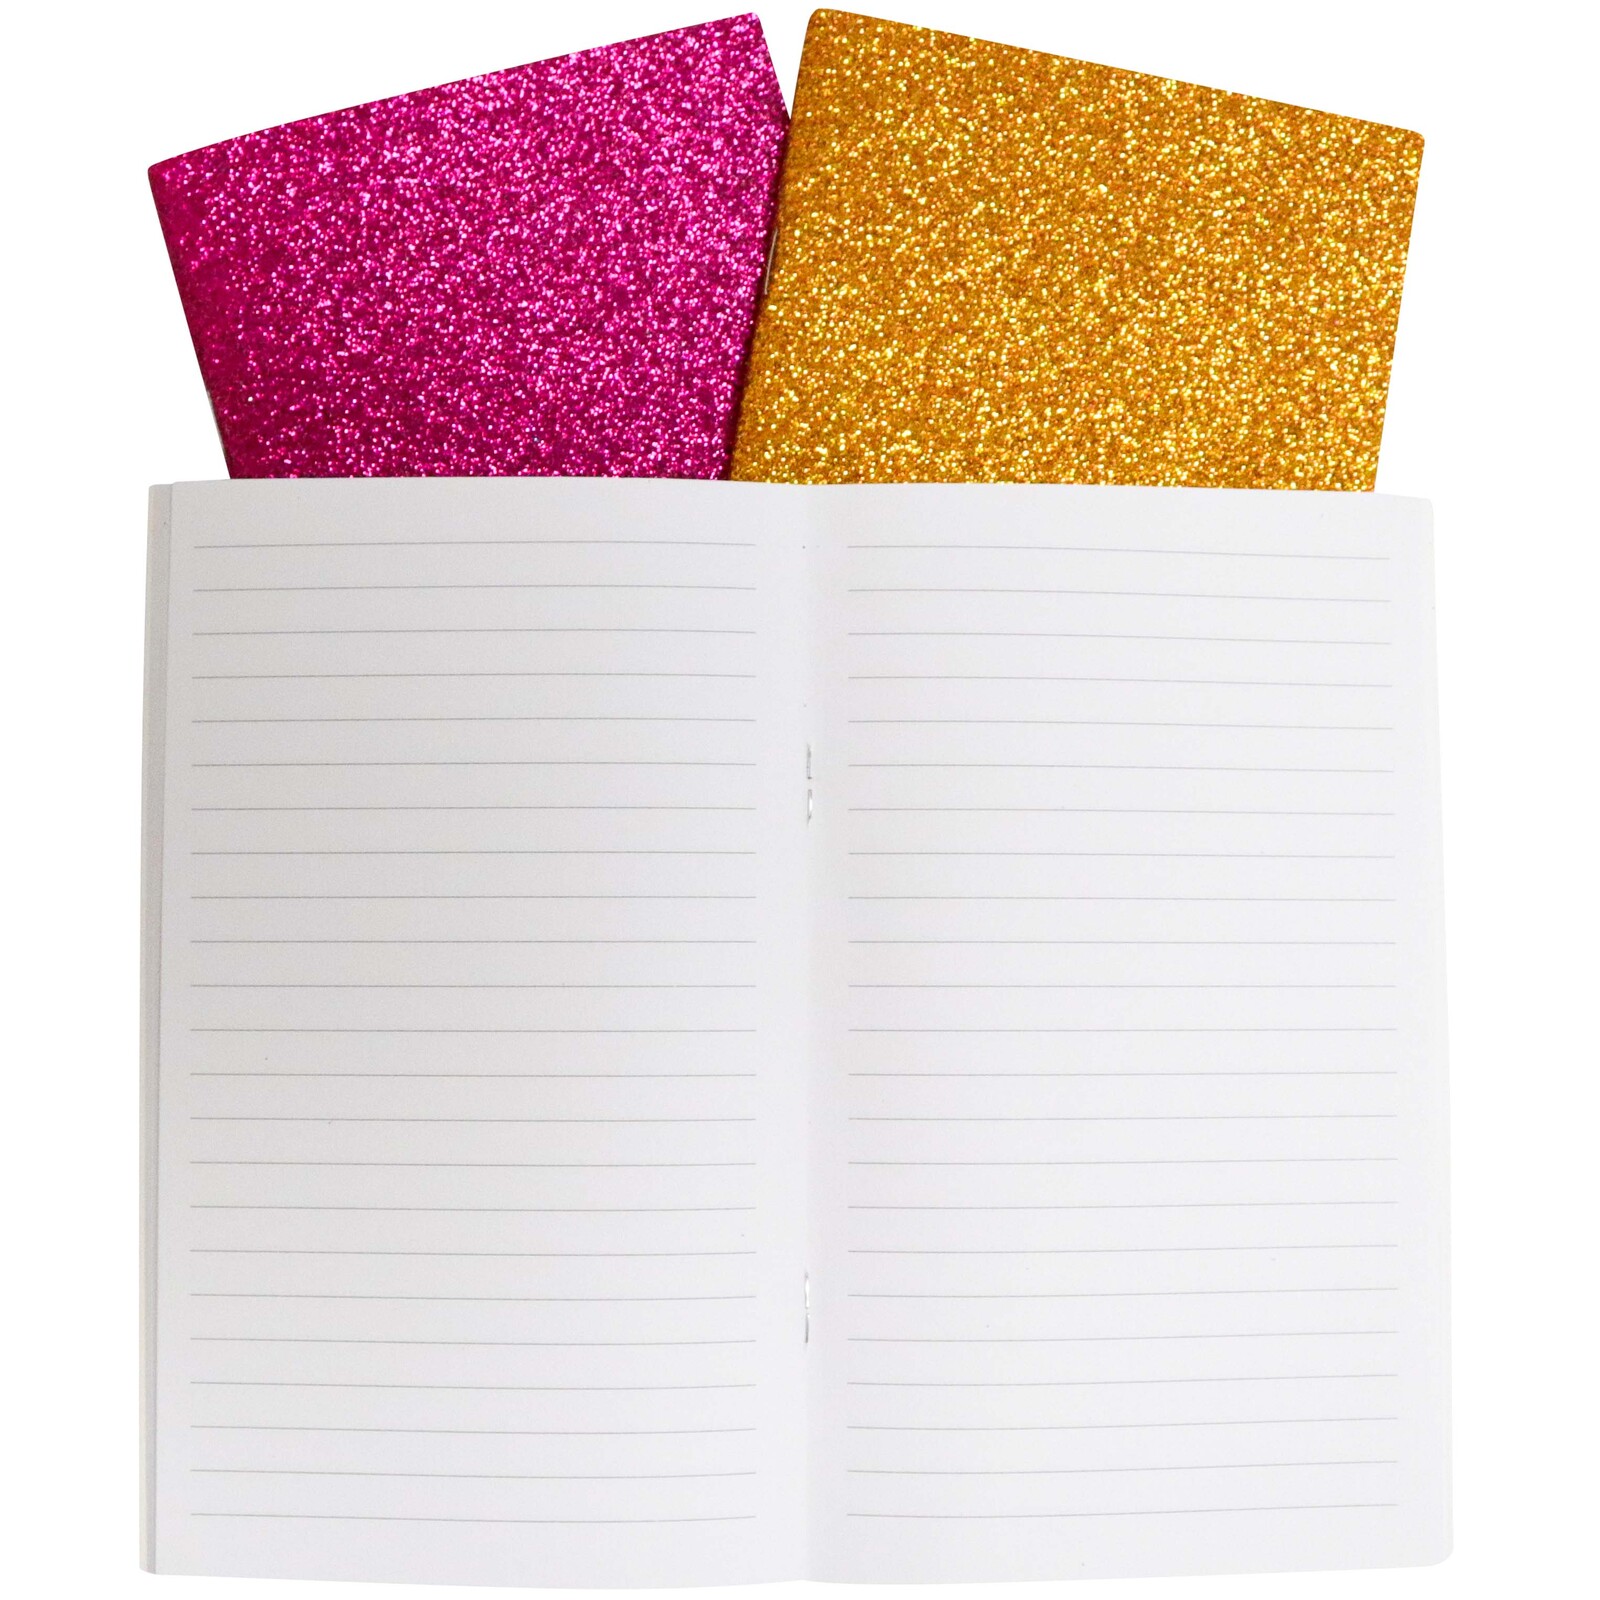 Notebooks S/3 Glitter Candy